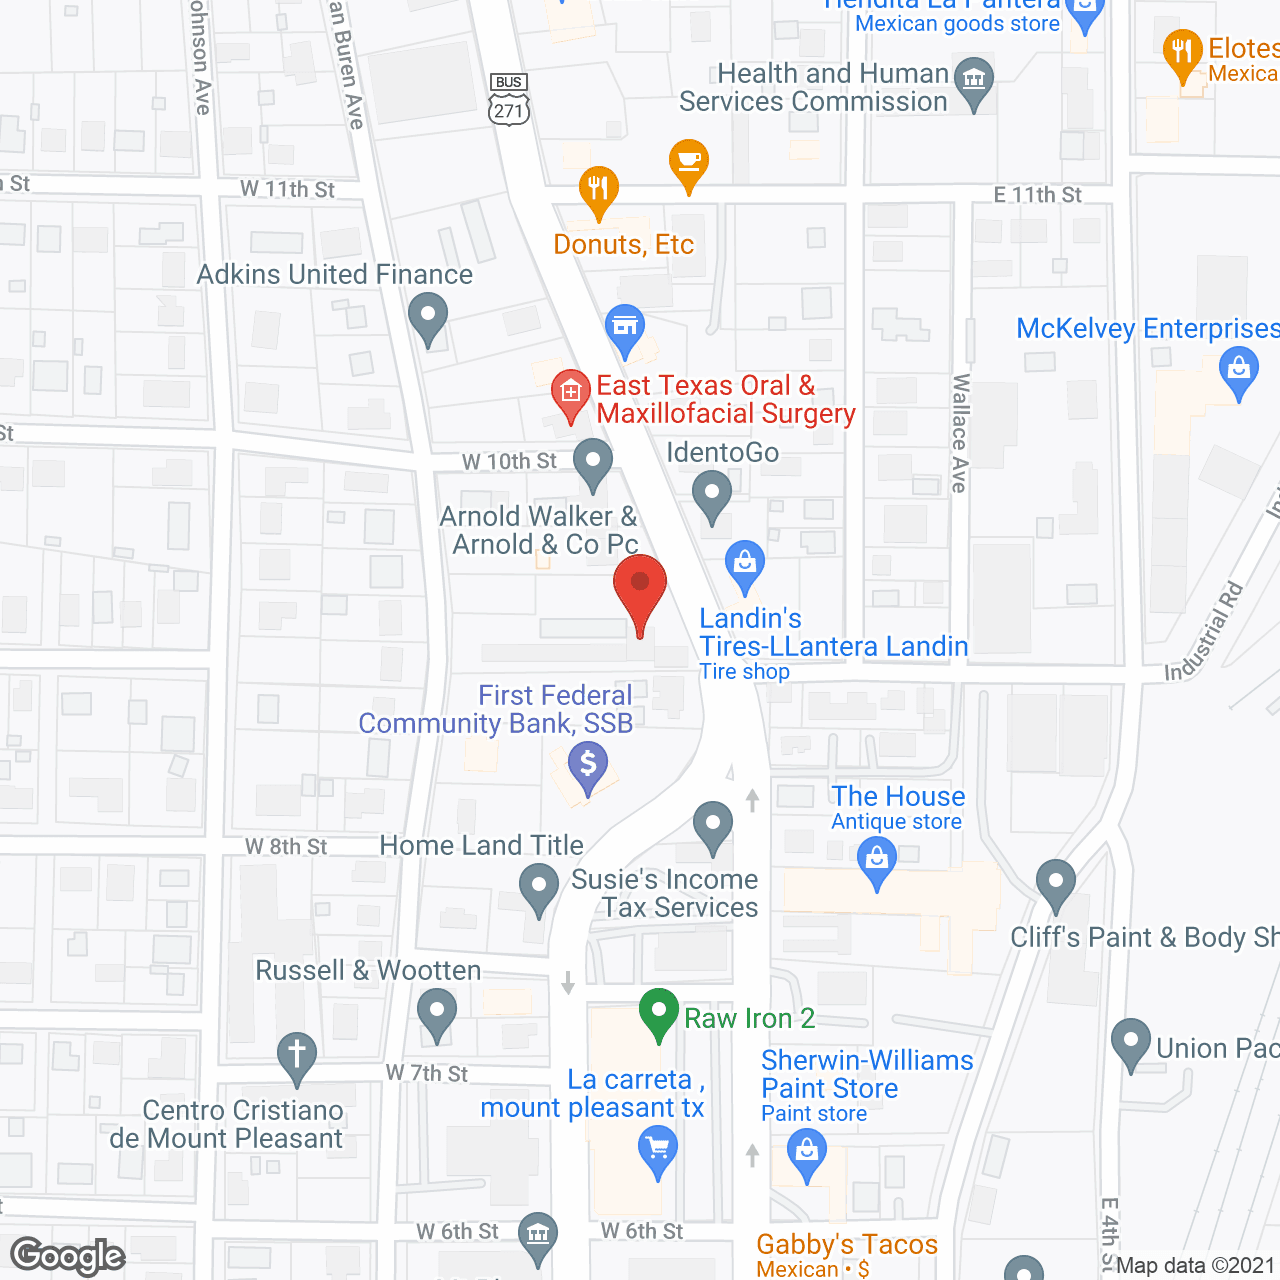 Currey Nursing Home in google map